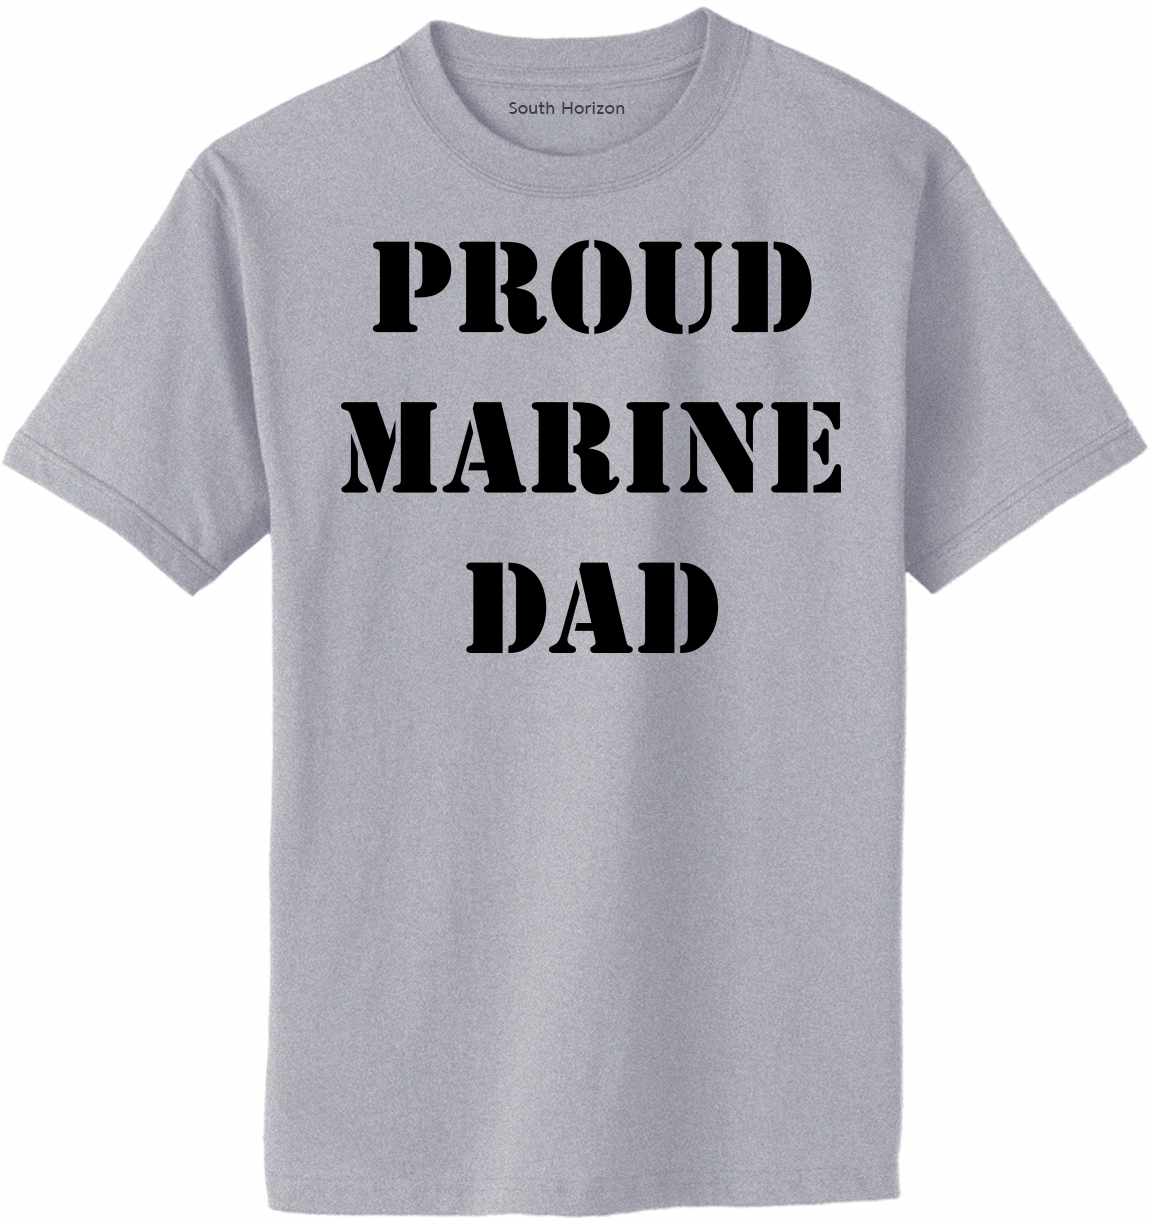 PROUD MARINE DAD Adult T-Shirt (#485-1)